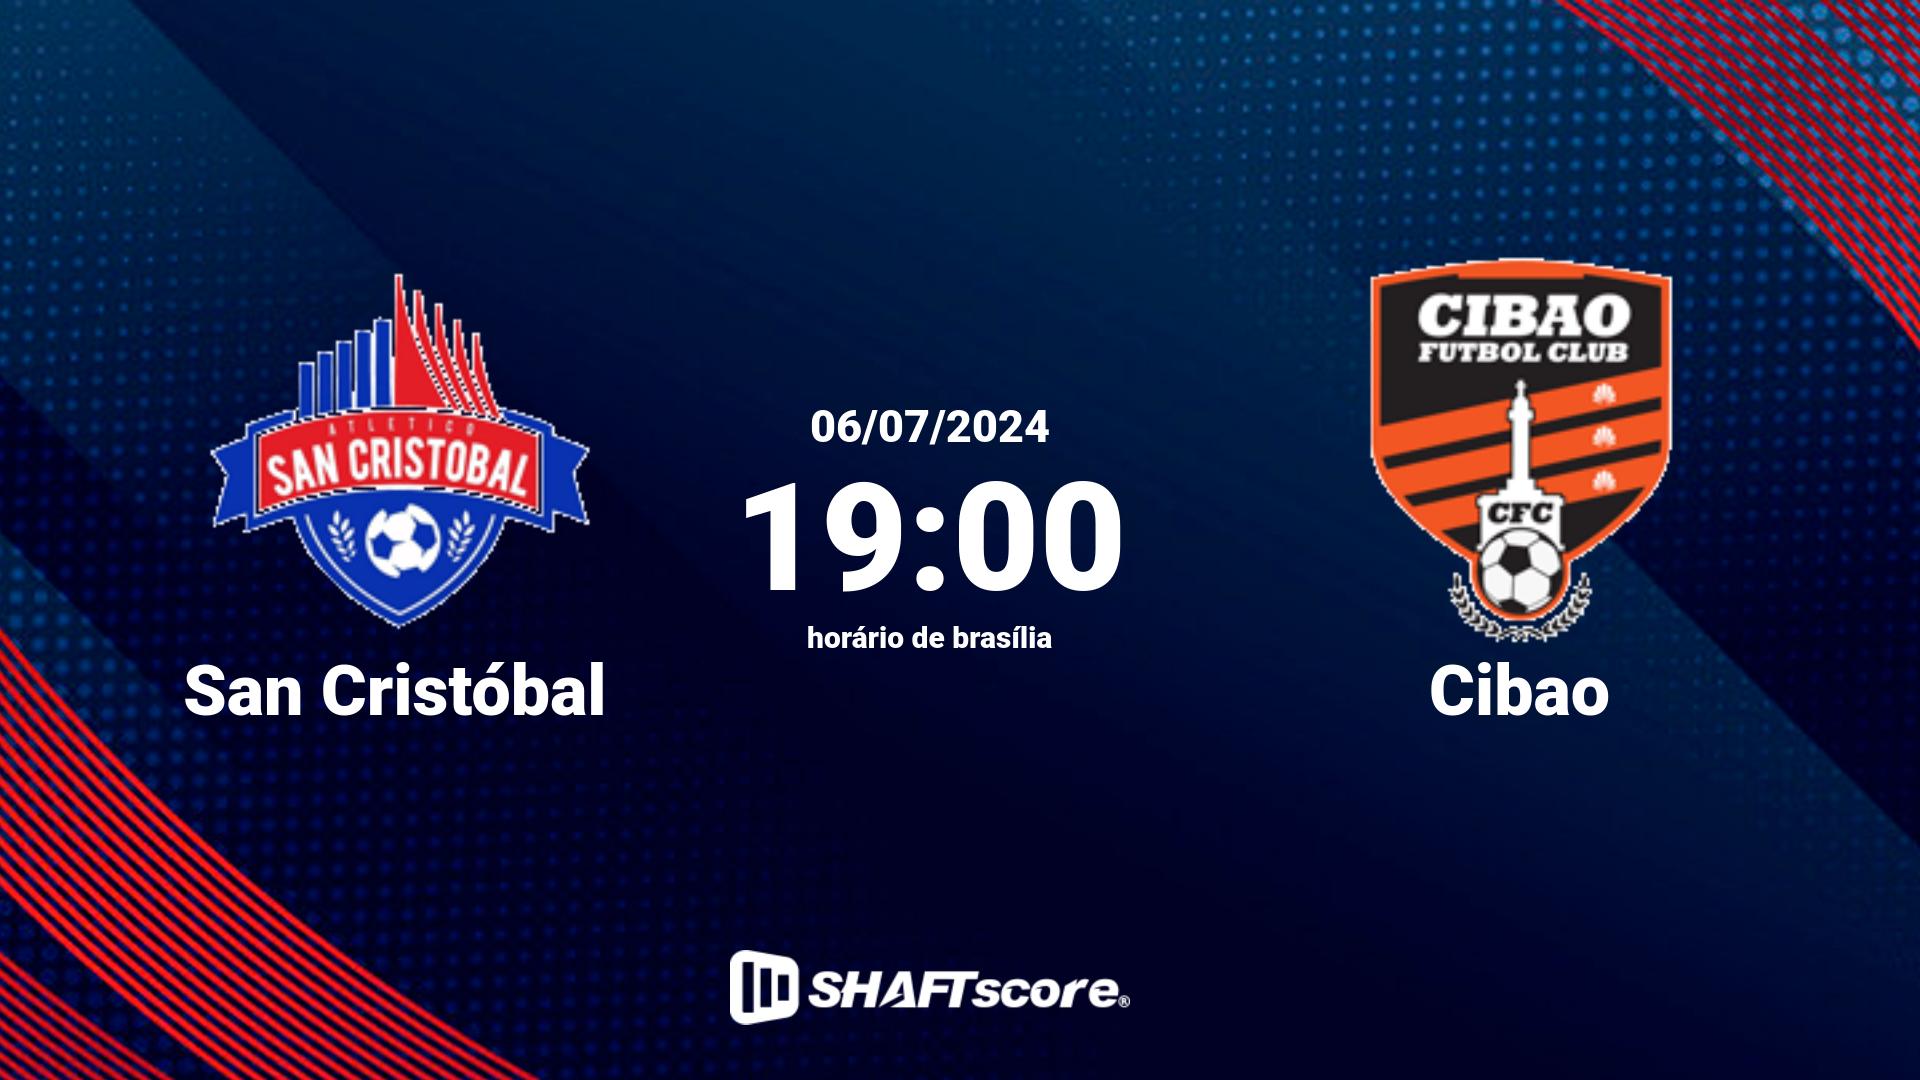 Estatísticas do jogo San Cristóbal vs Cibao 06.07 19:00